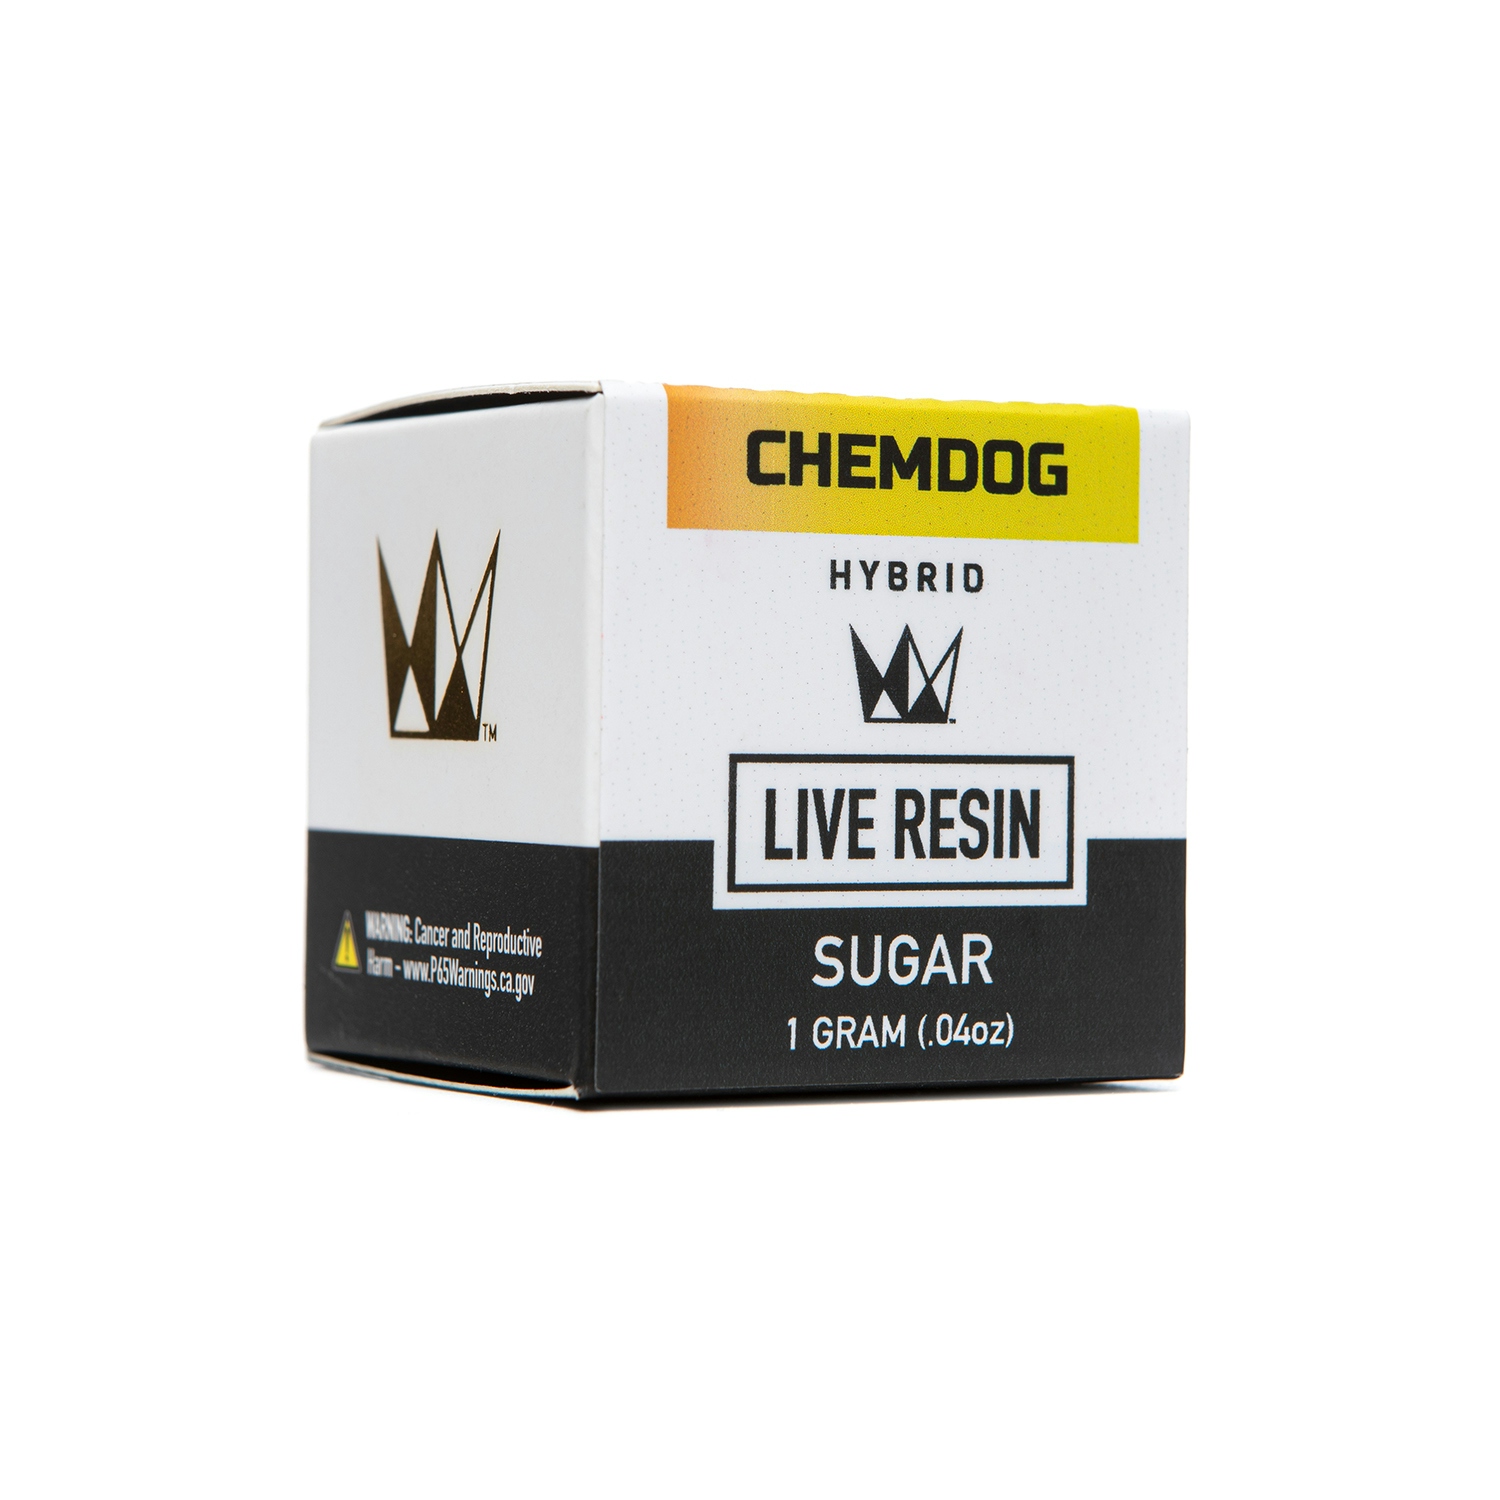 Chemdog Live Resin Sugar